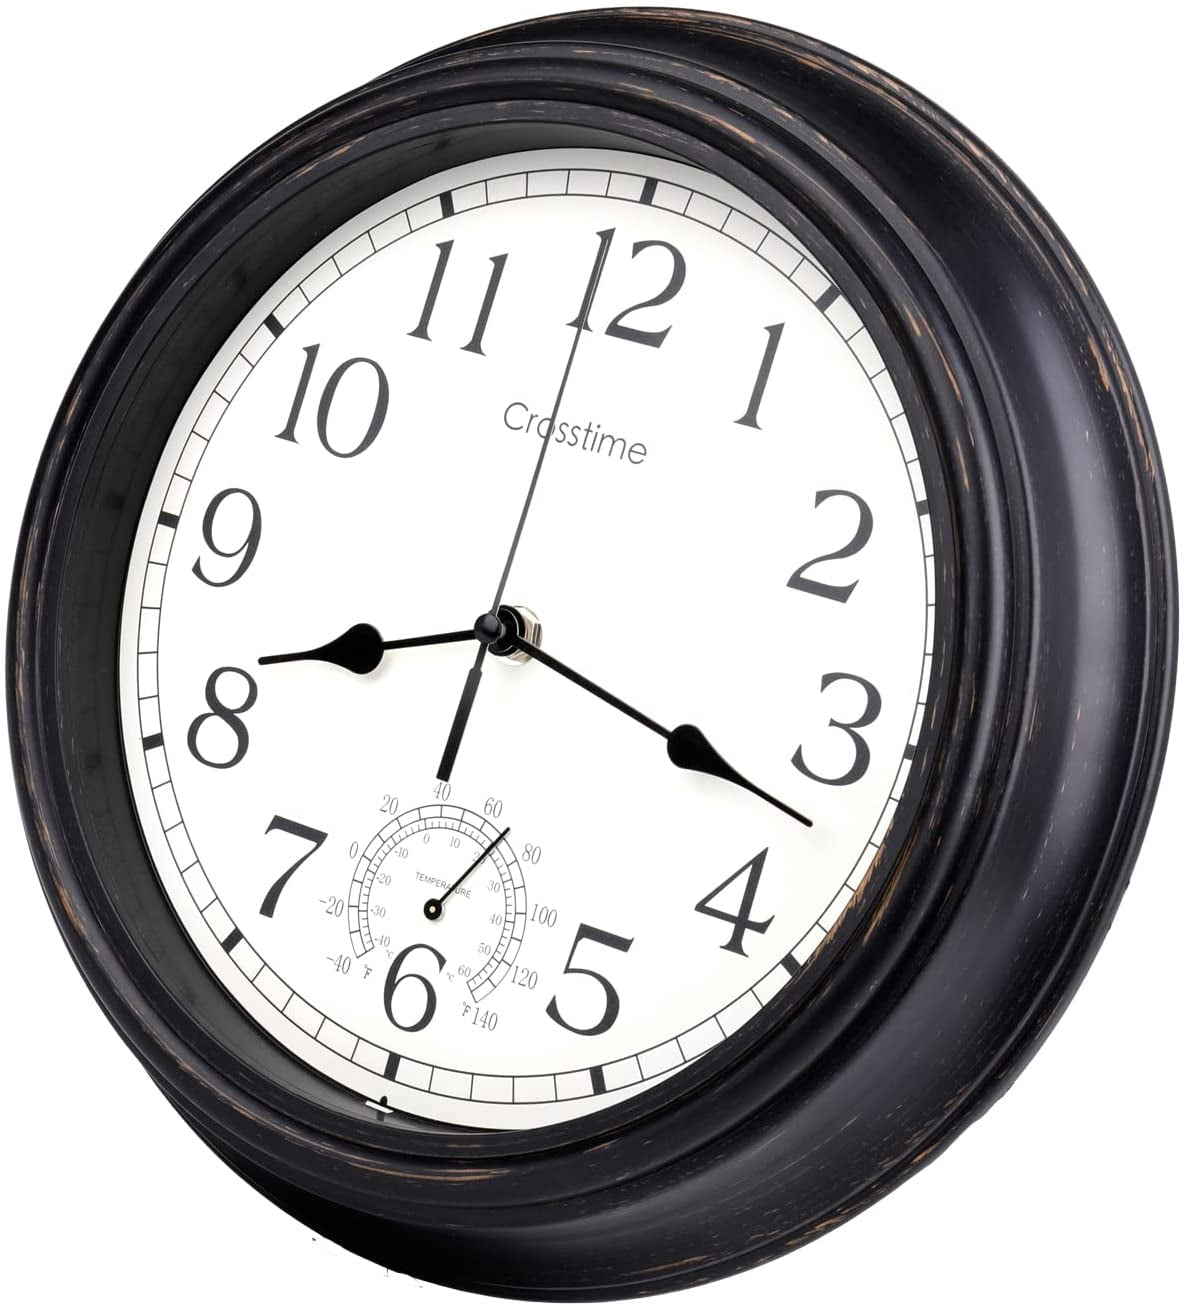 12 Inch Wall Clock with Thermometer,Battery Operated Waterproof Indoor/Outdoor Clock for Bathroom/Kitchen/Bedroom,Bronze